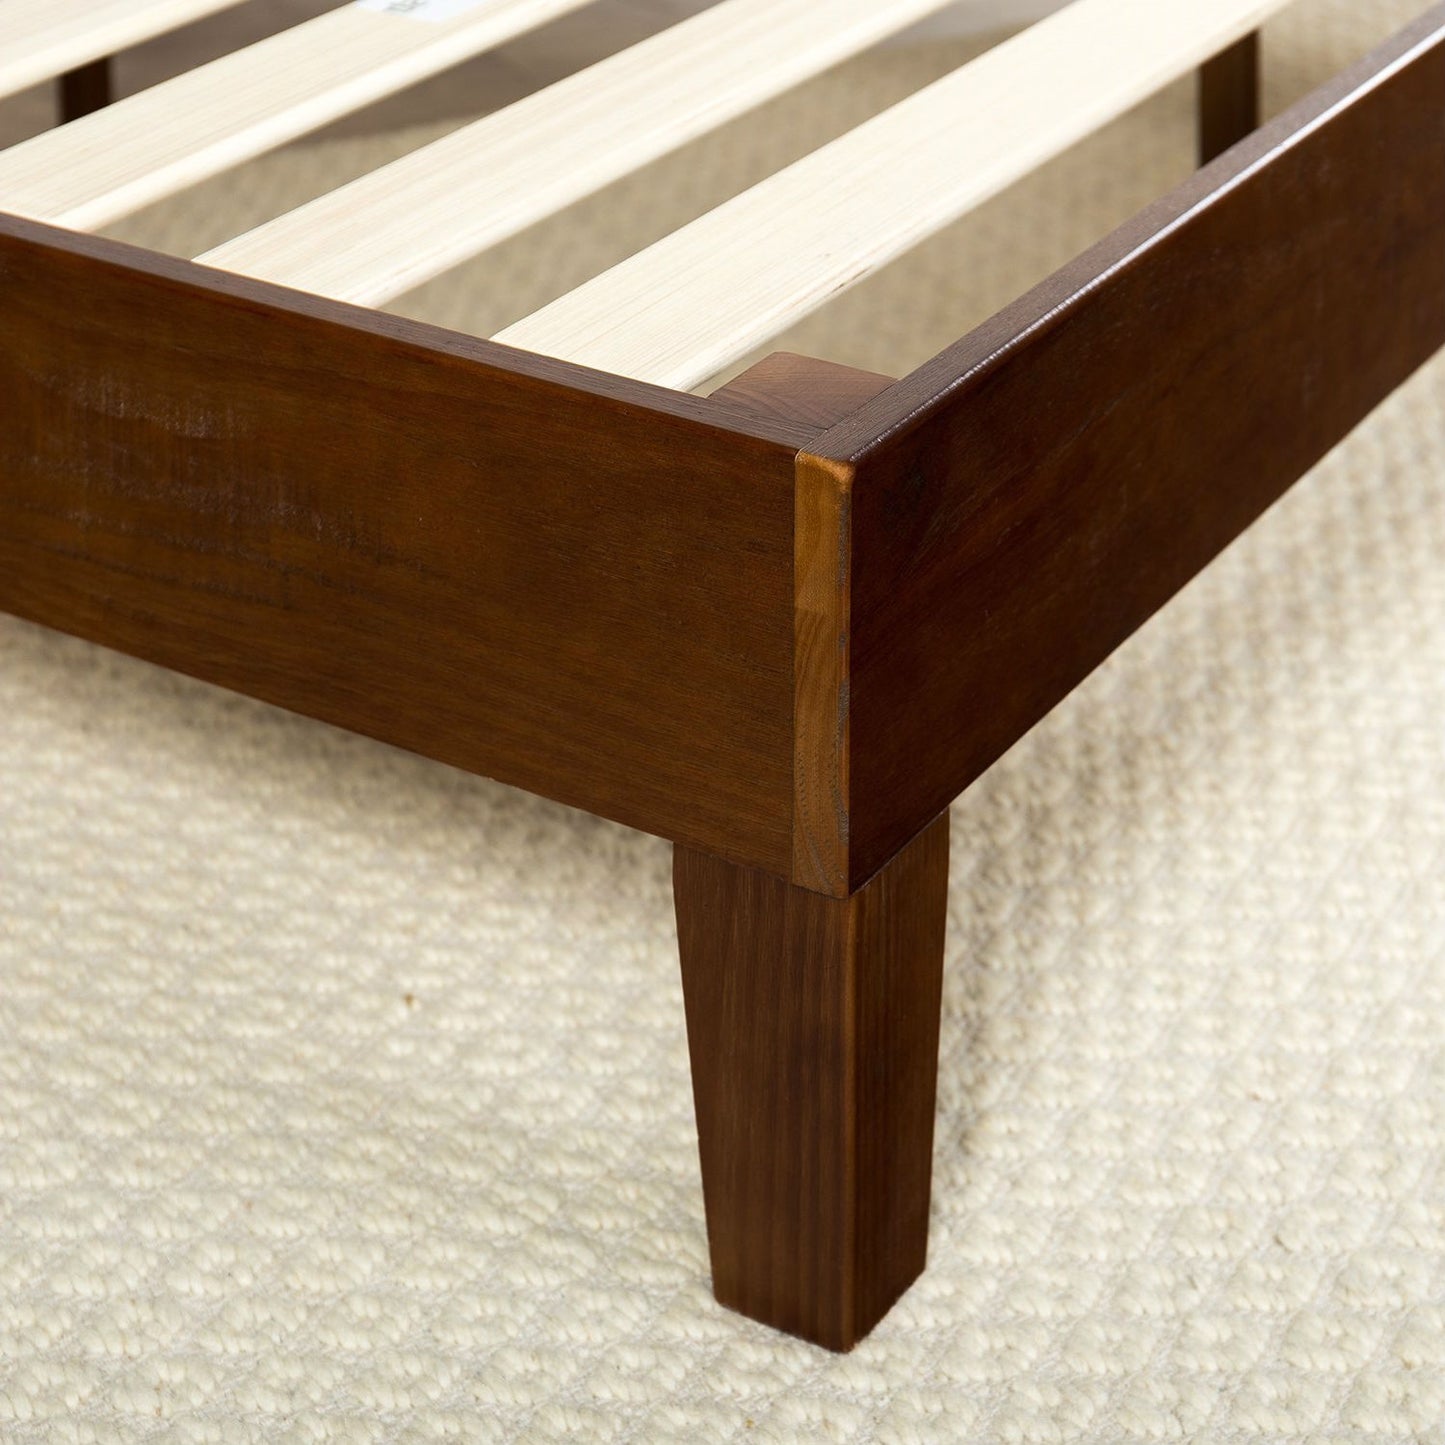 King size Low Profile Solid Wood Platform Bed Frame in Espresso Finish